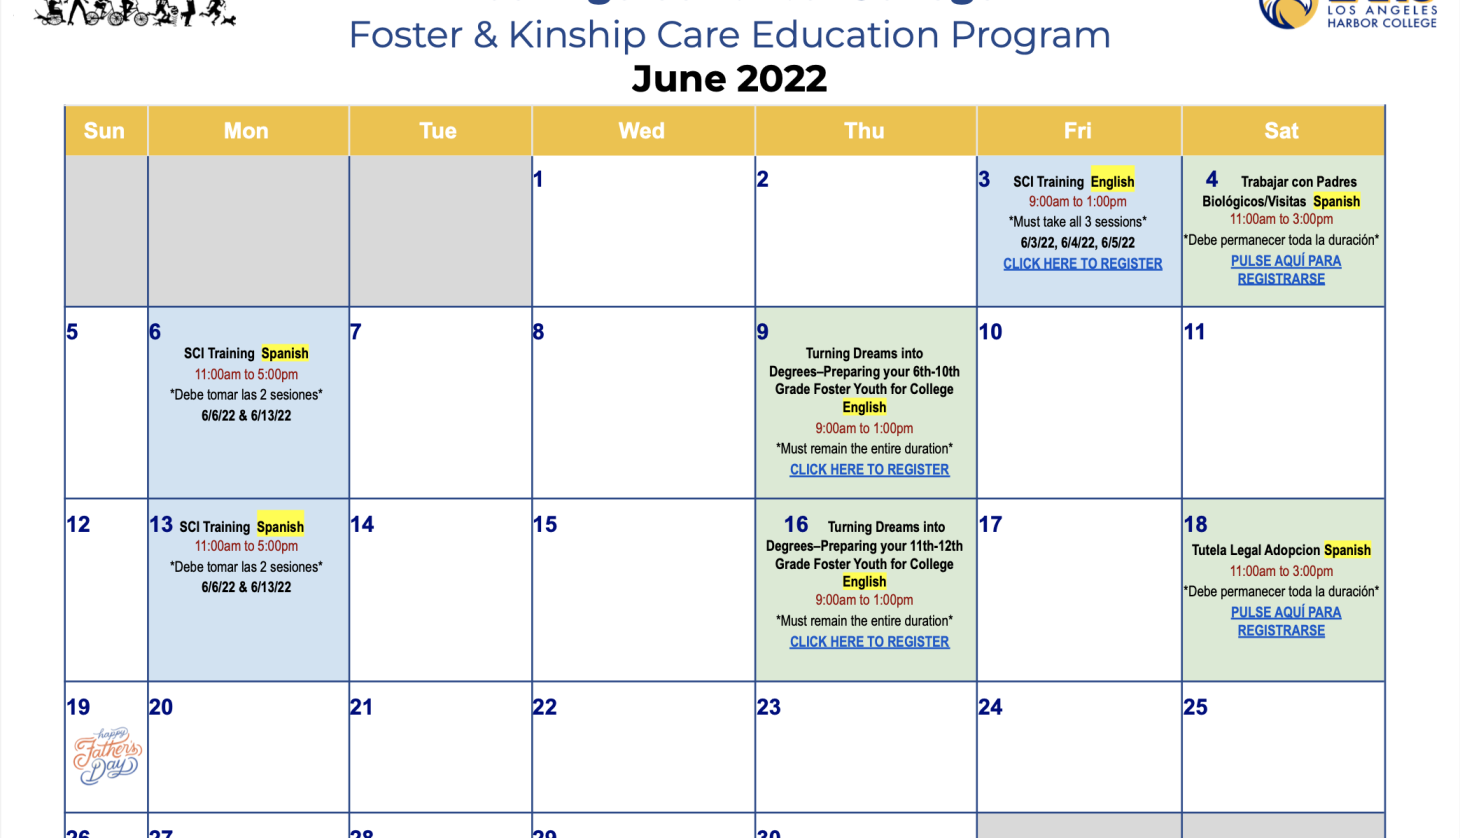 June Calendar of Foster and Kinship Care Program